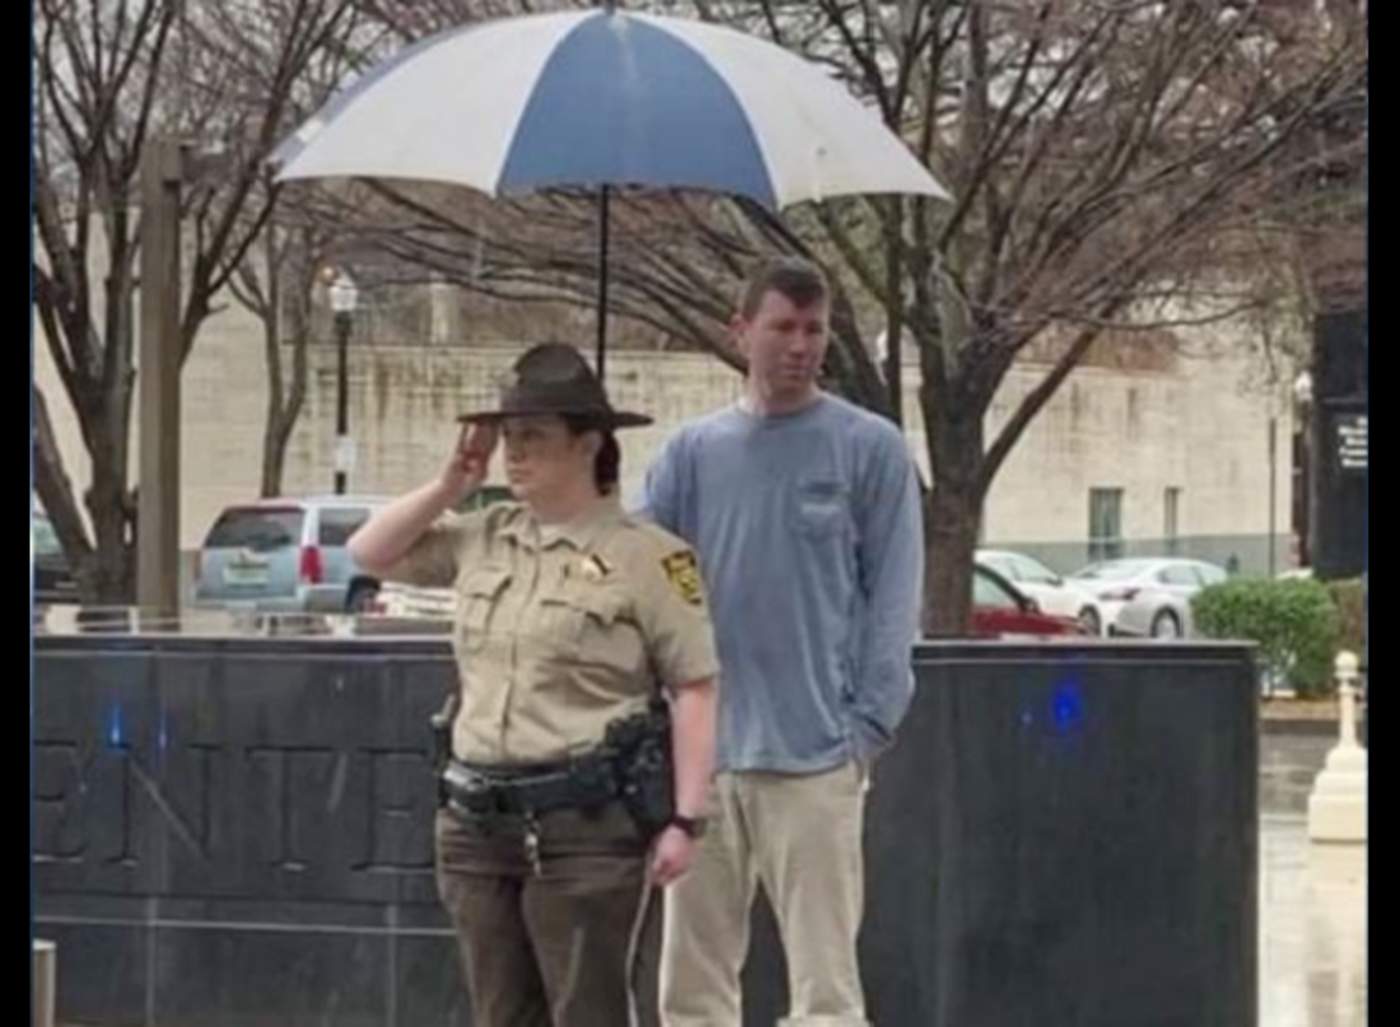 Imagen de persona protegiendo de la lluvia a oficial se hace viral